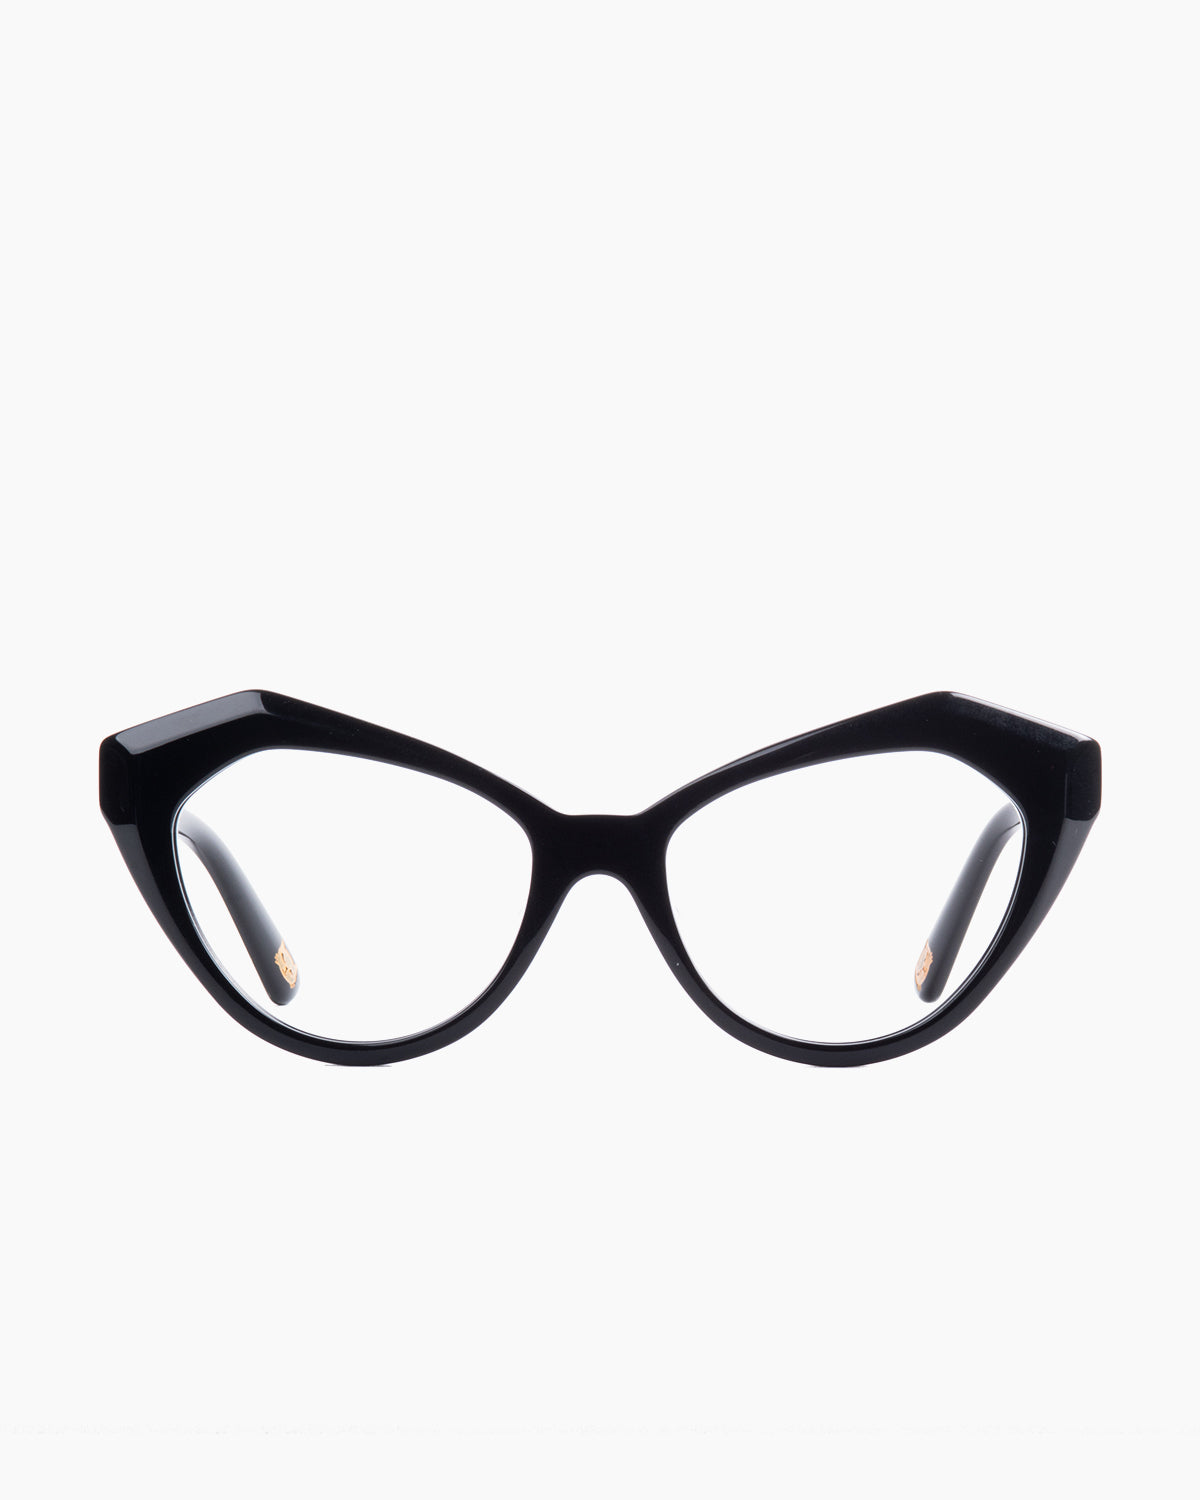 Spectacleeyeworks - Ayalah - c306 | Bar à lunettes:  Marie-Sophie Dion